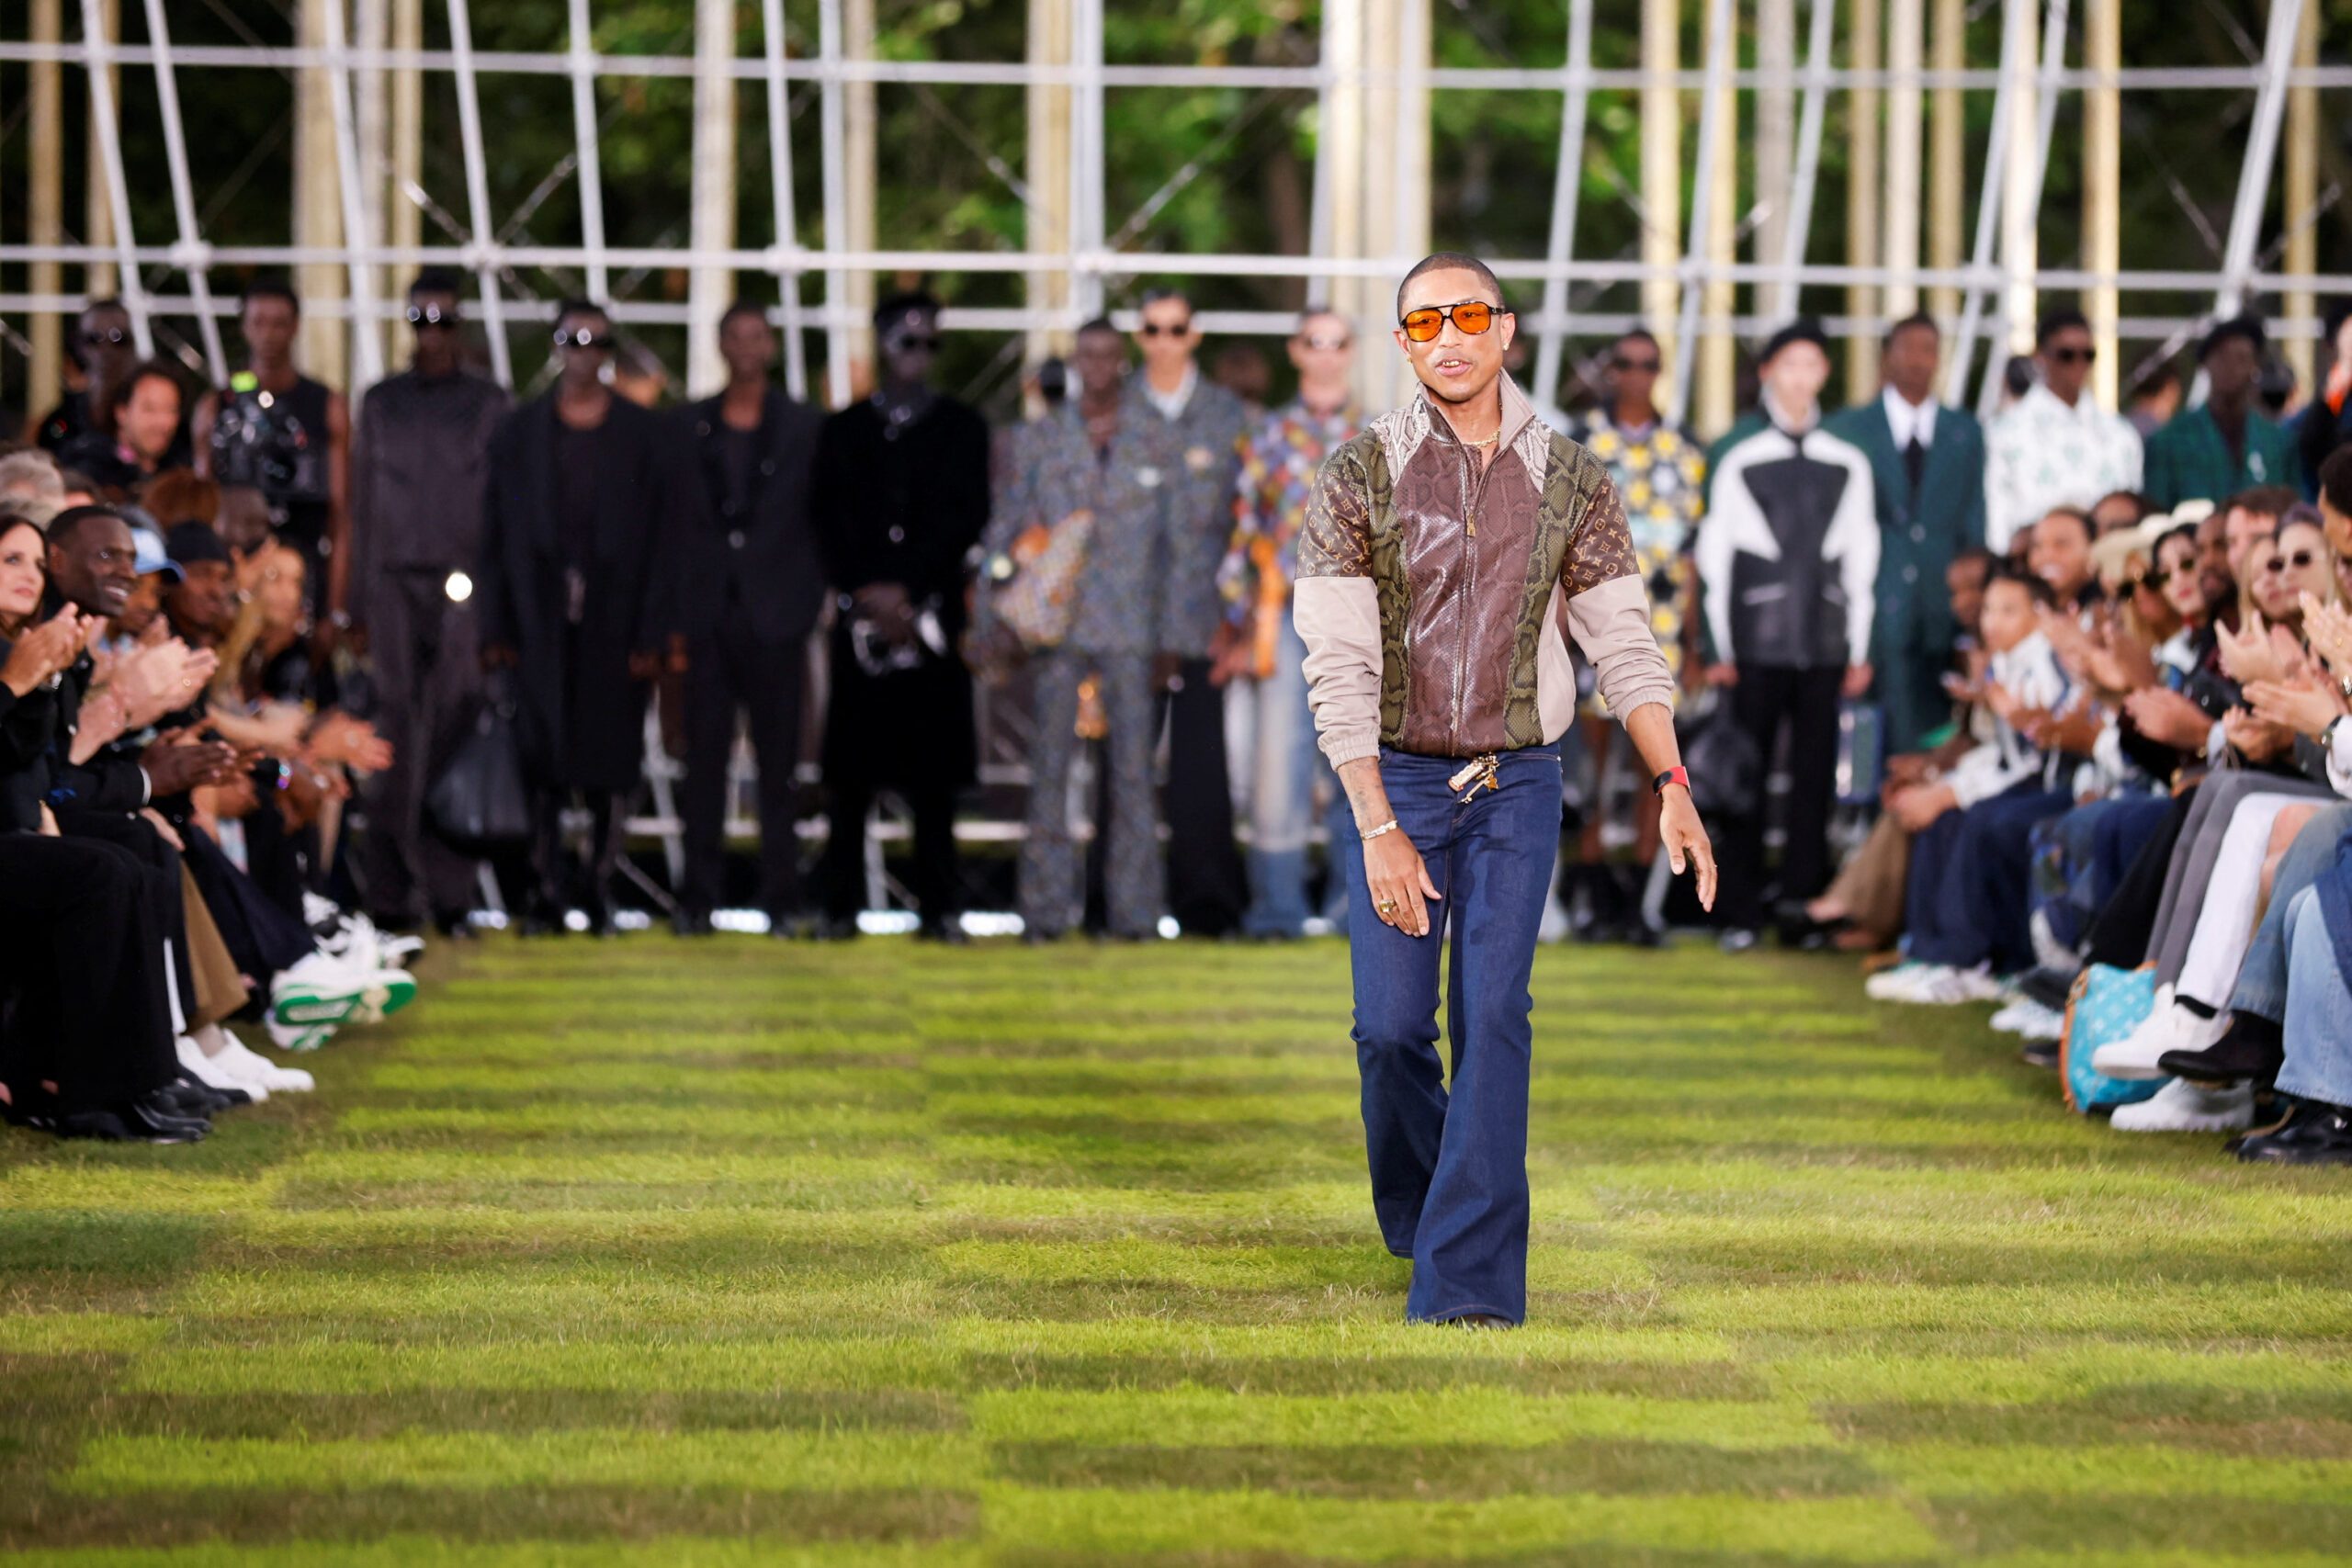 Pharrell Williams kicks off Paris Fashion Week with Louis Vuitton show at UNESCO